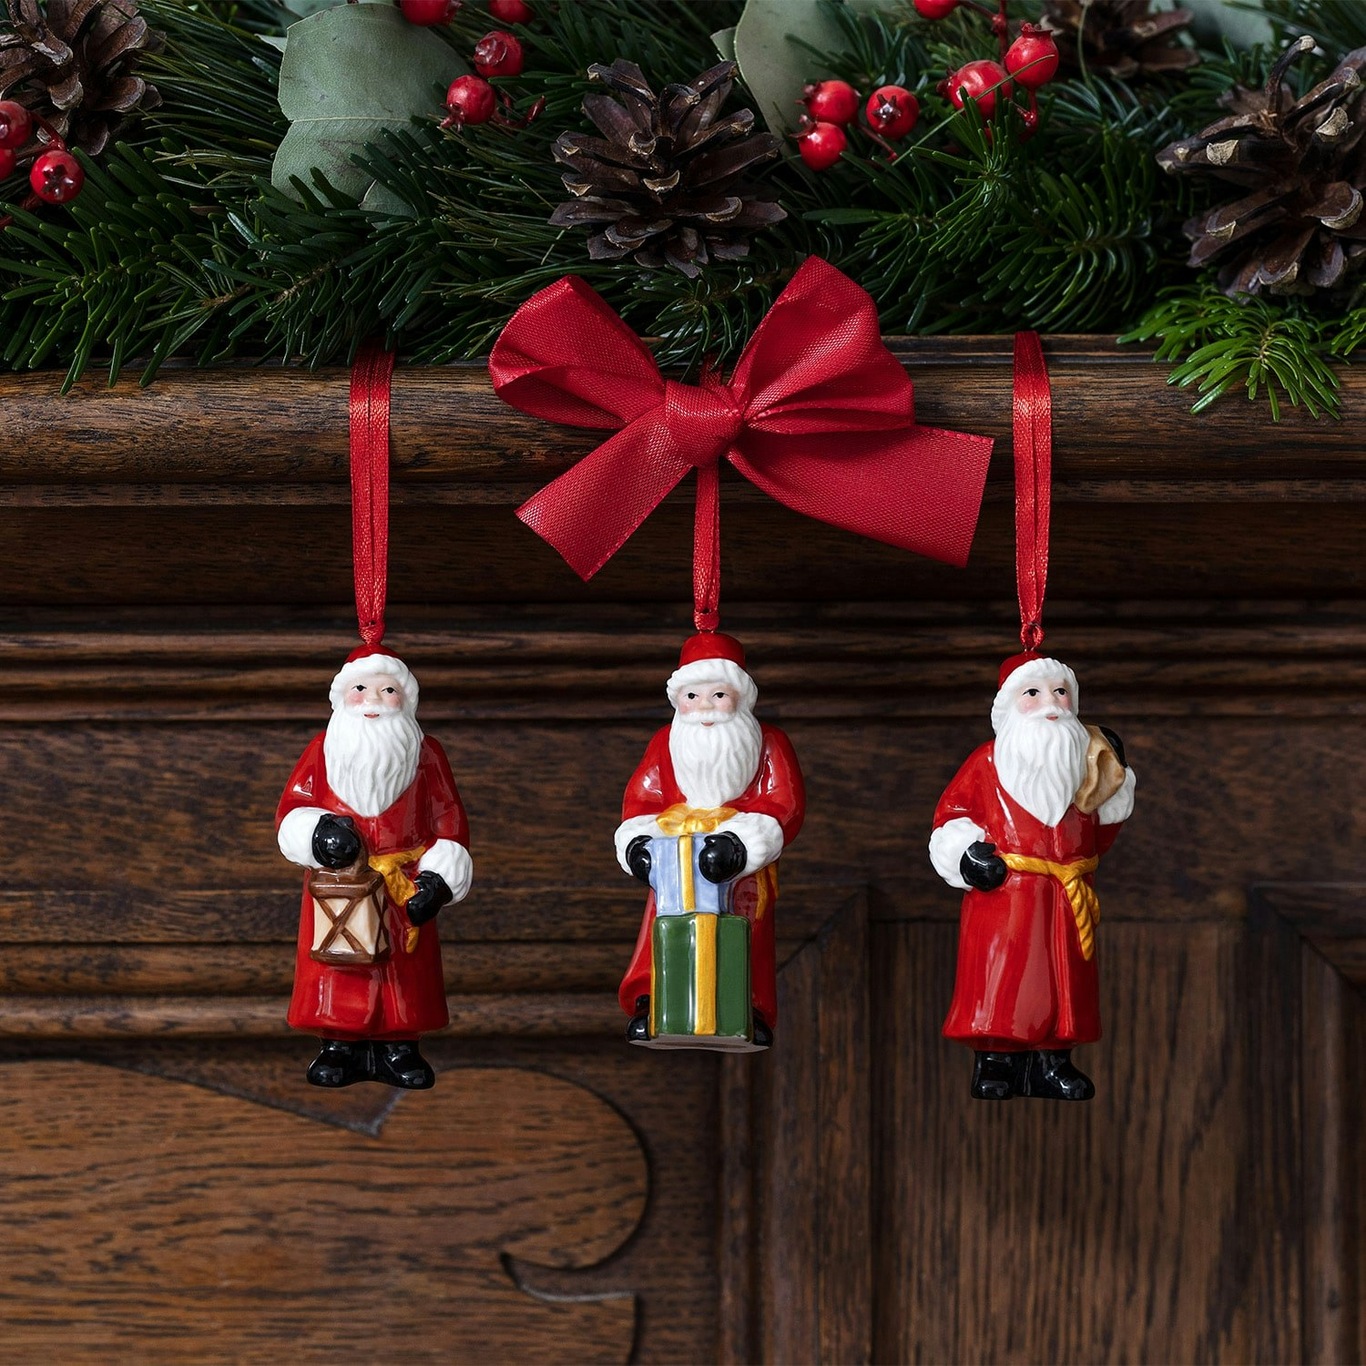 https://royaldesign.com/image/2/villeroy-boch-nostalgic-ornaments-santa-claus-3-pack-1?w=800&quality=80